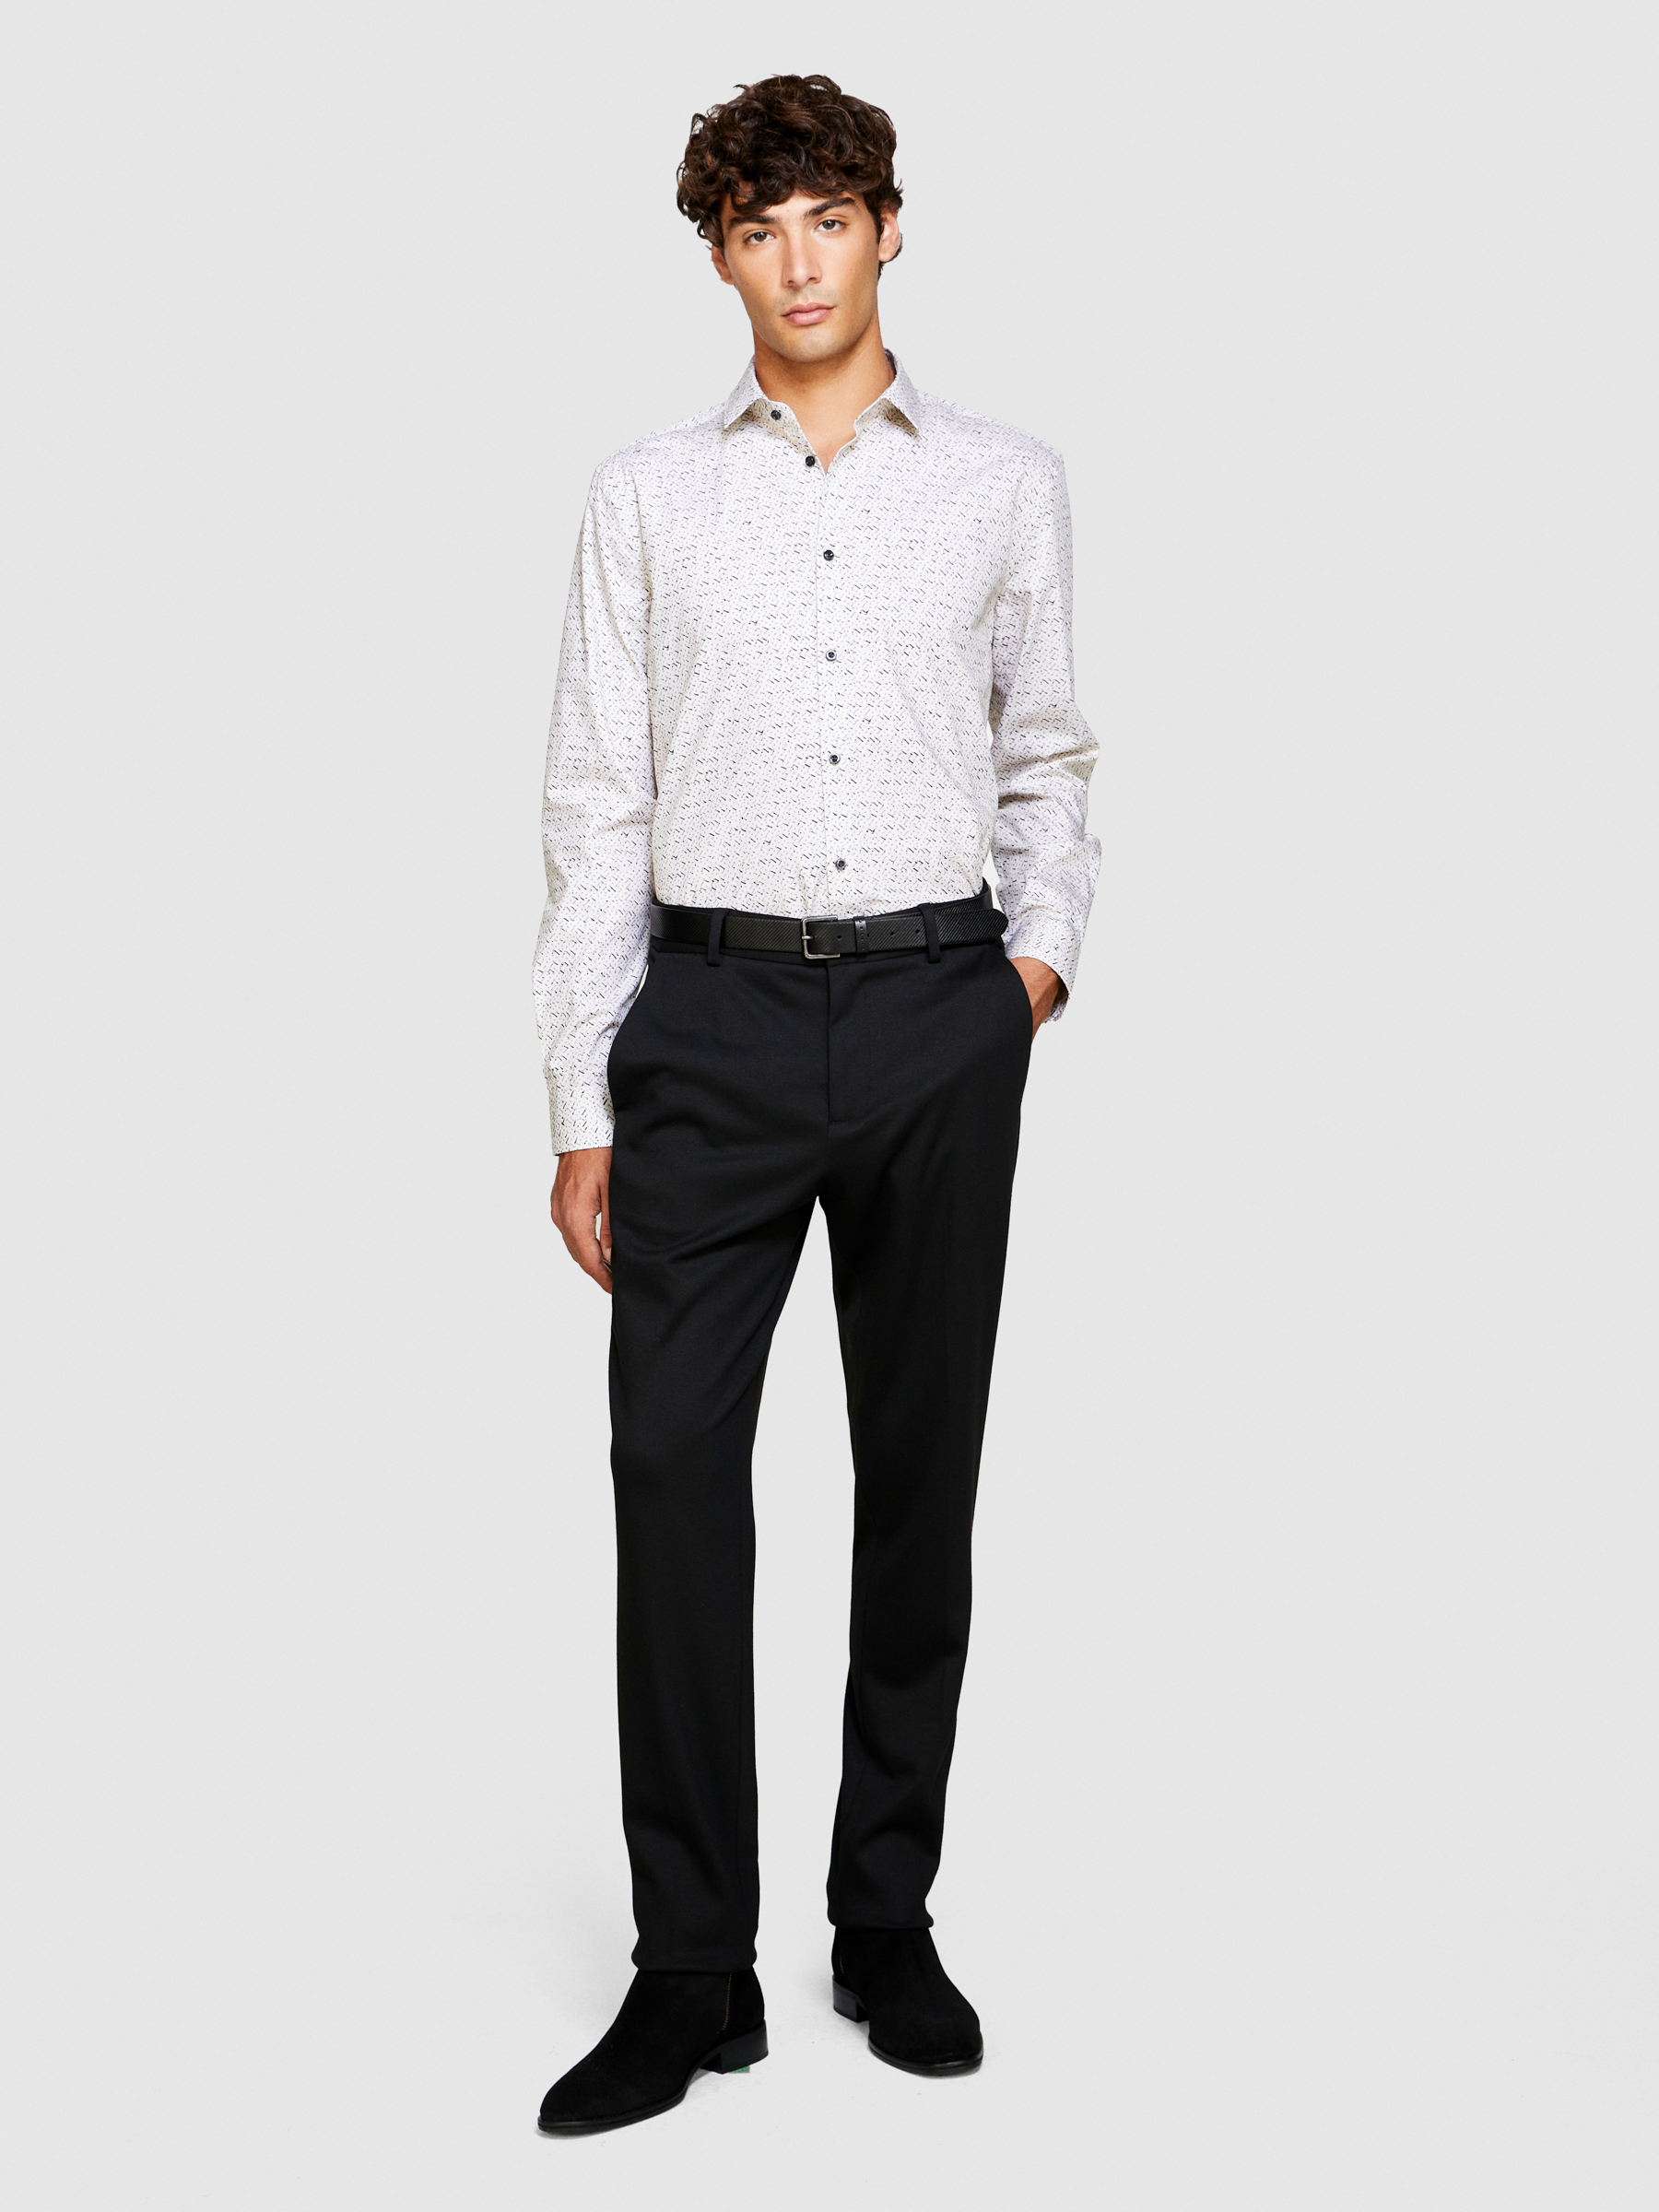 Sisley - Slim Fit Printed Shirt, Man, Creamy White, Size: 45